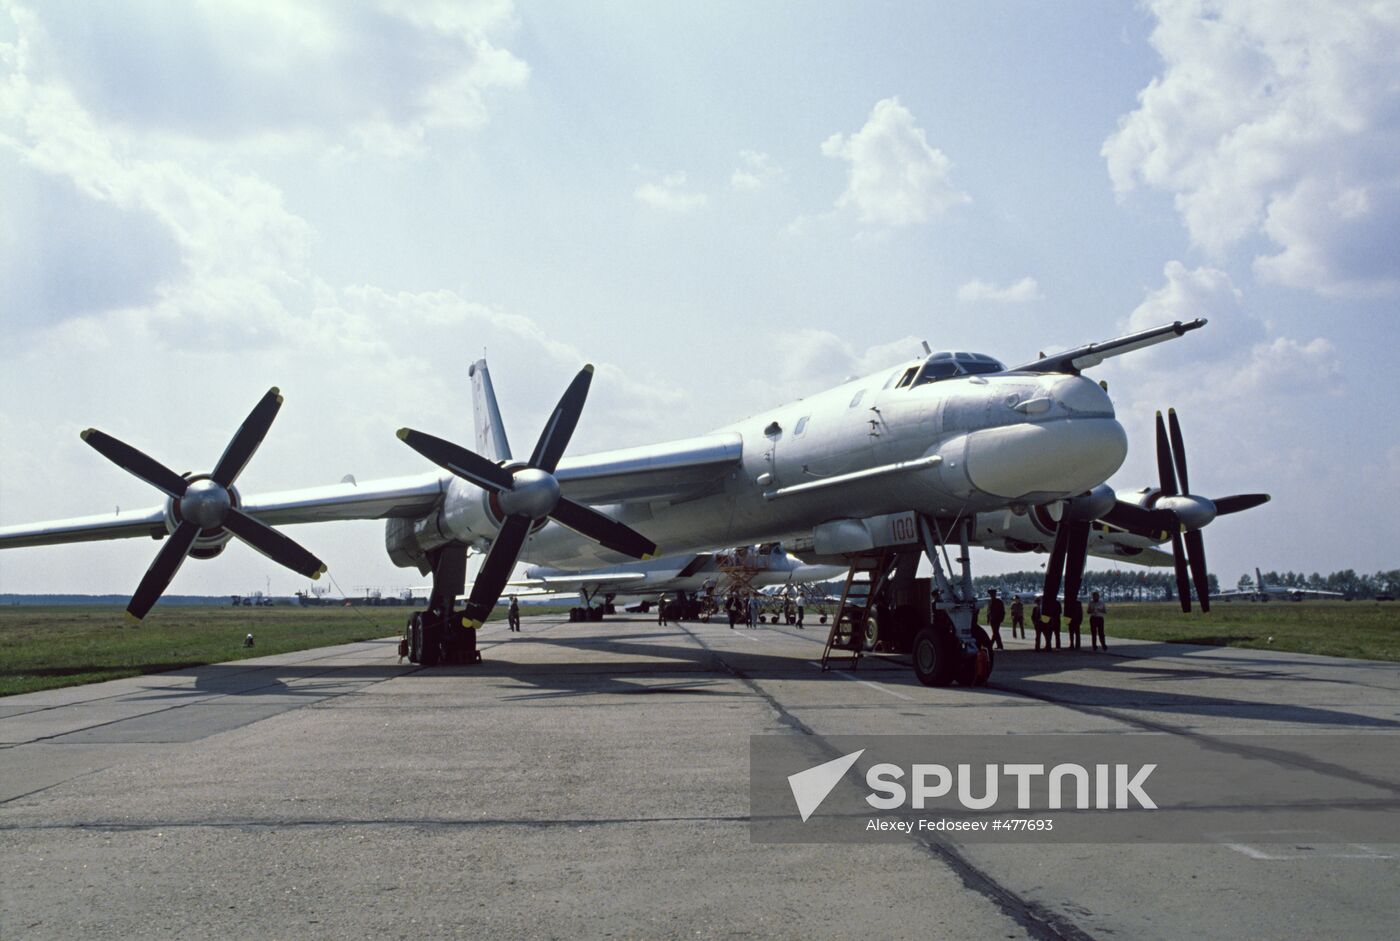 A Tupolev Tu-95-MS Bear strategic bomber